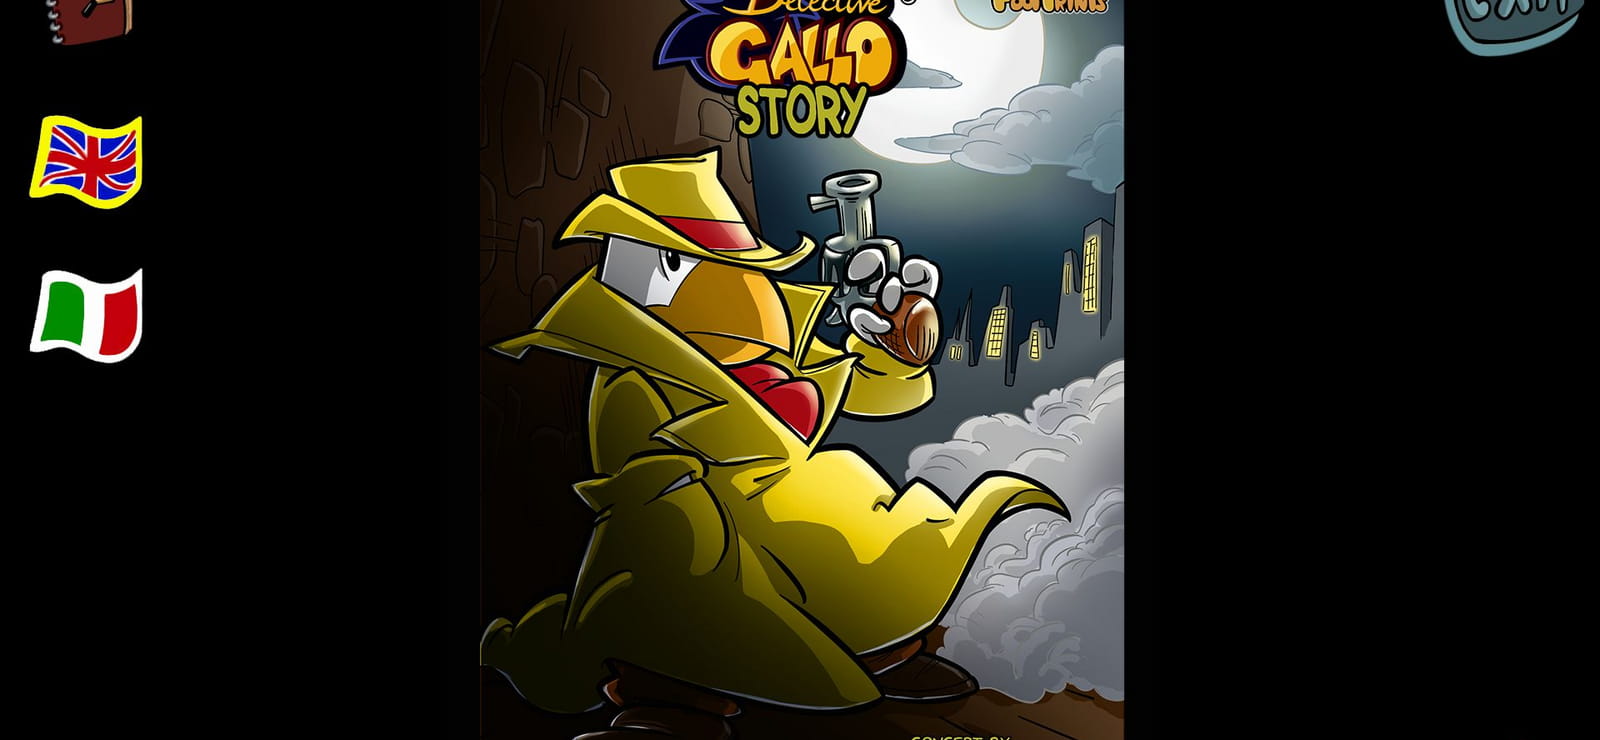 Detective Gallo - Story